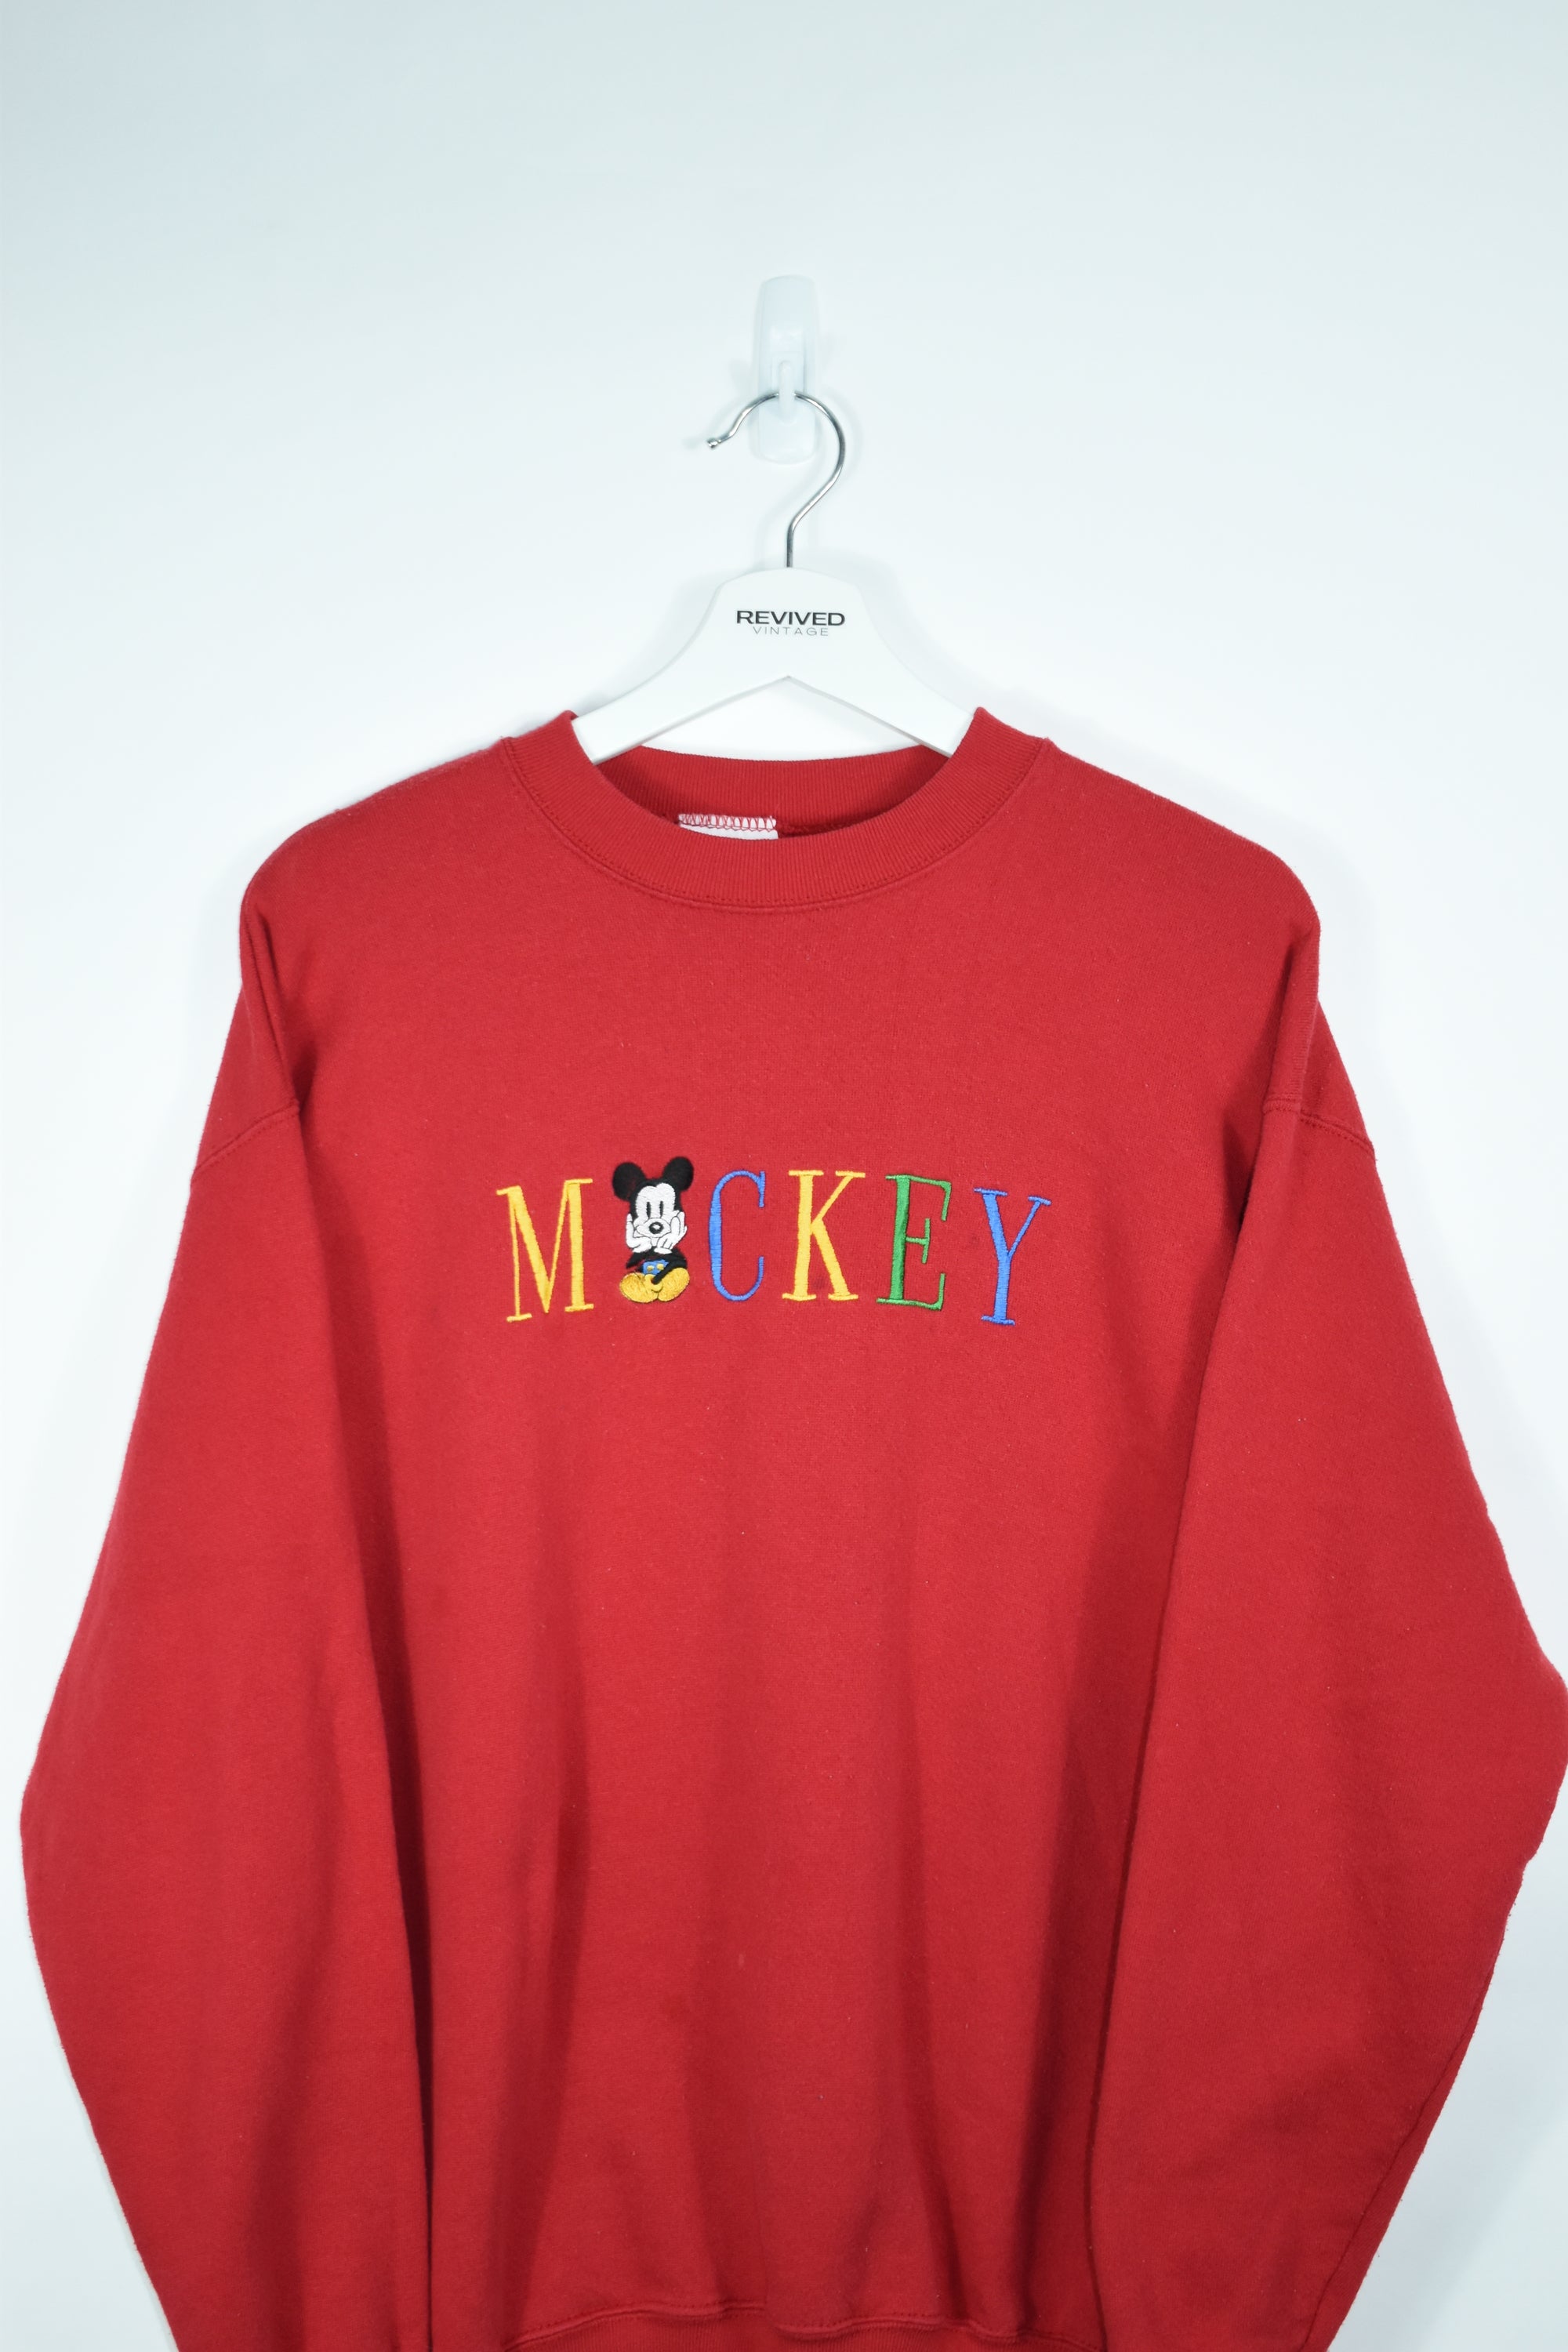 Vintage Disney Red Embroidery Mickey Mouse Sweatshirt Medium / Large